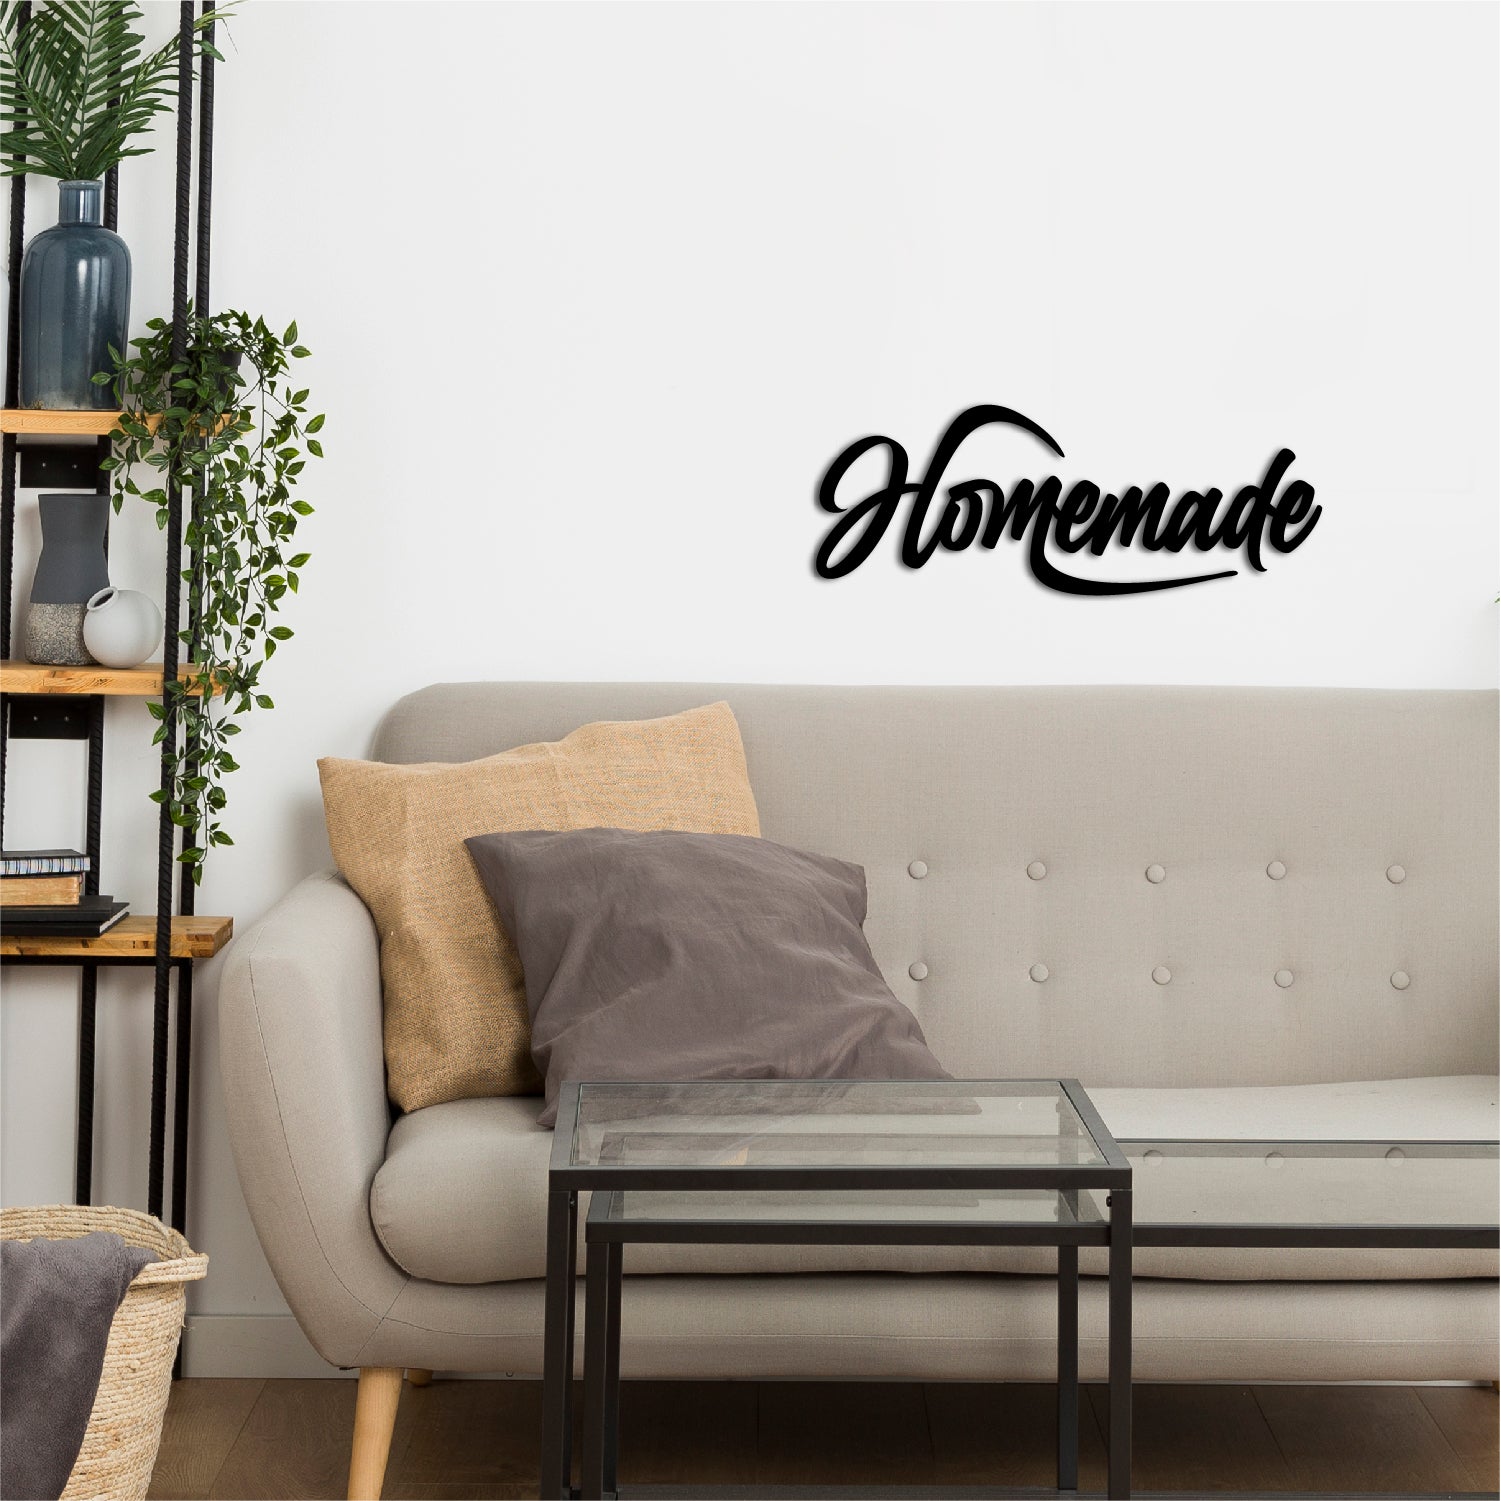 "Homemade" Black Engineered Wood Wall Art Cutout, Ready to Hang Home Decor 4